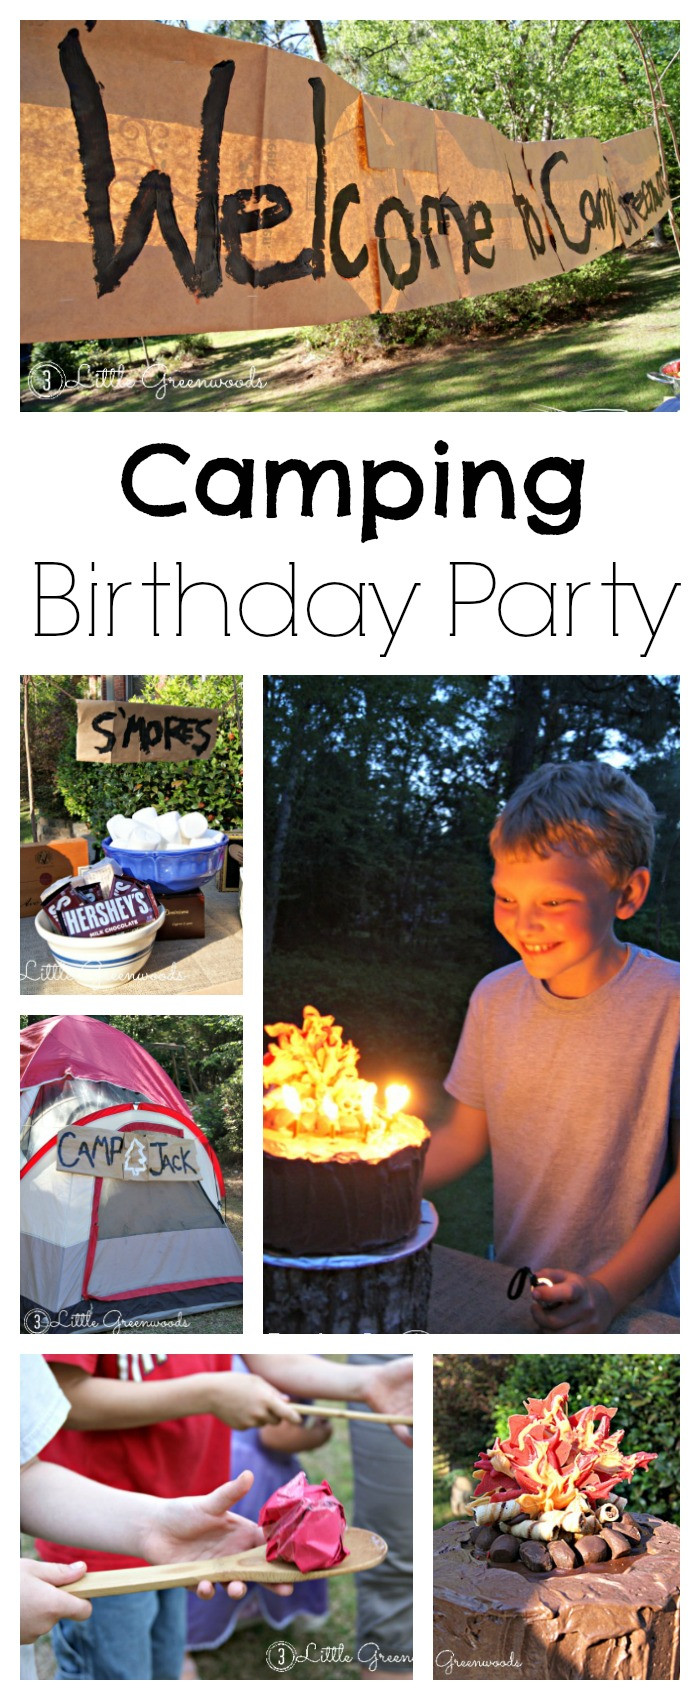 Backyard Camping Birthday Party Ideas
 Camping Birthday Party Fun